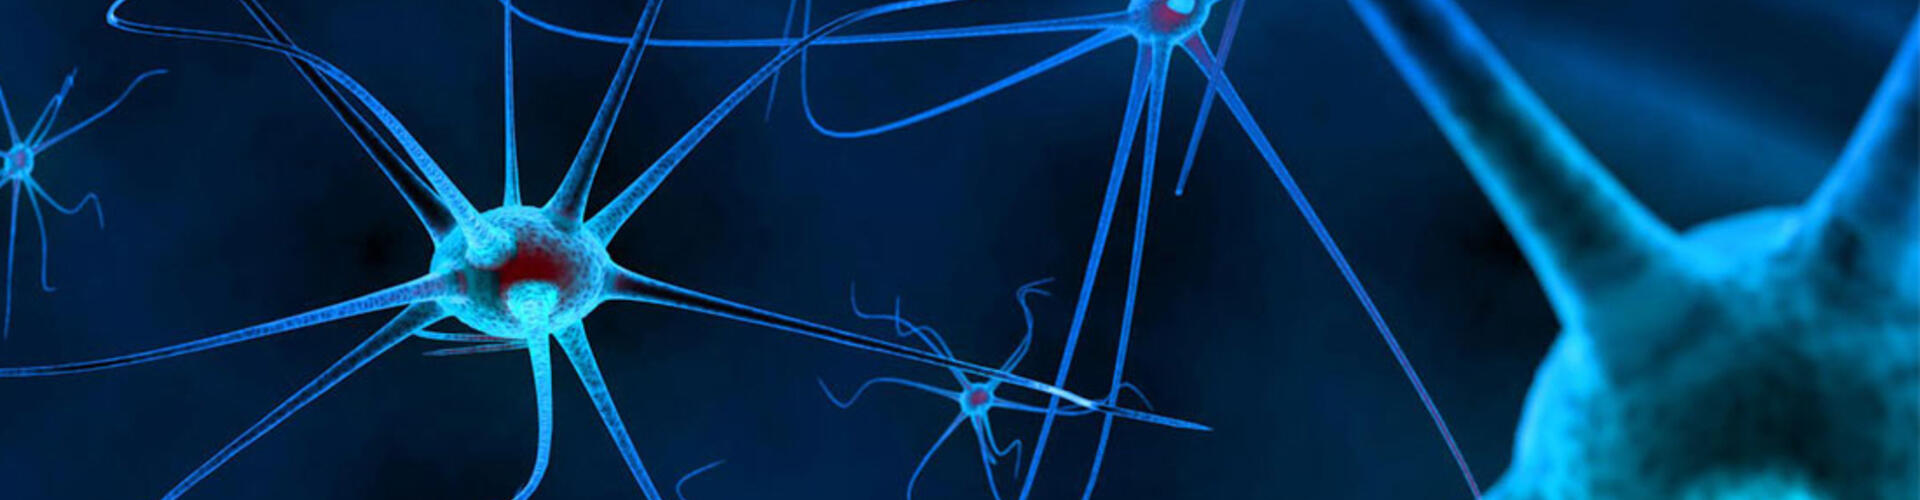 Artistic representation of neurons.